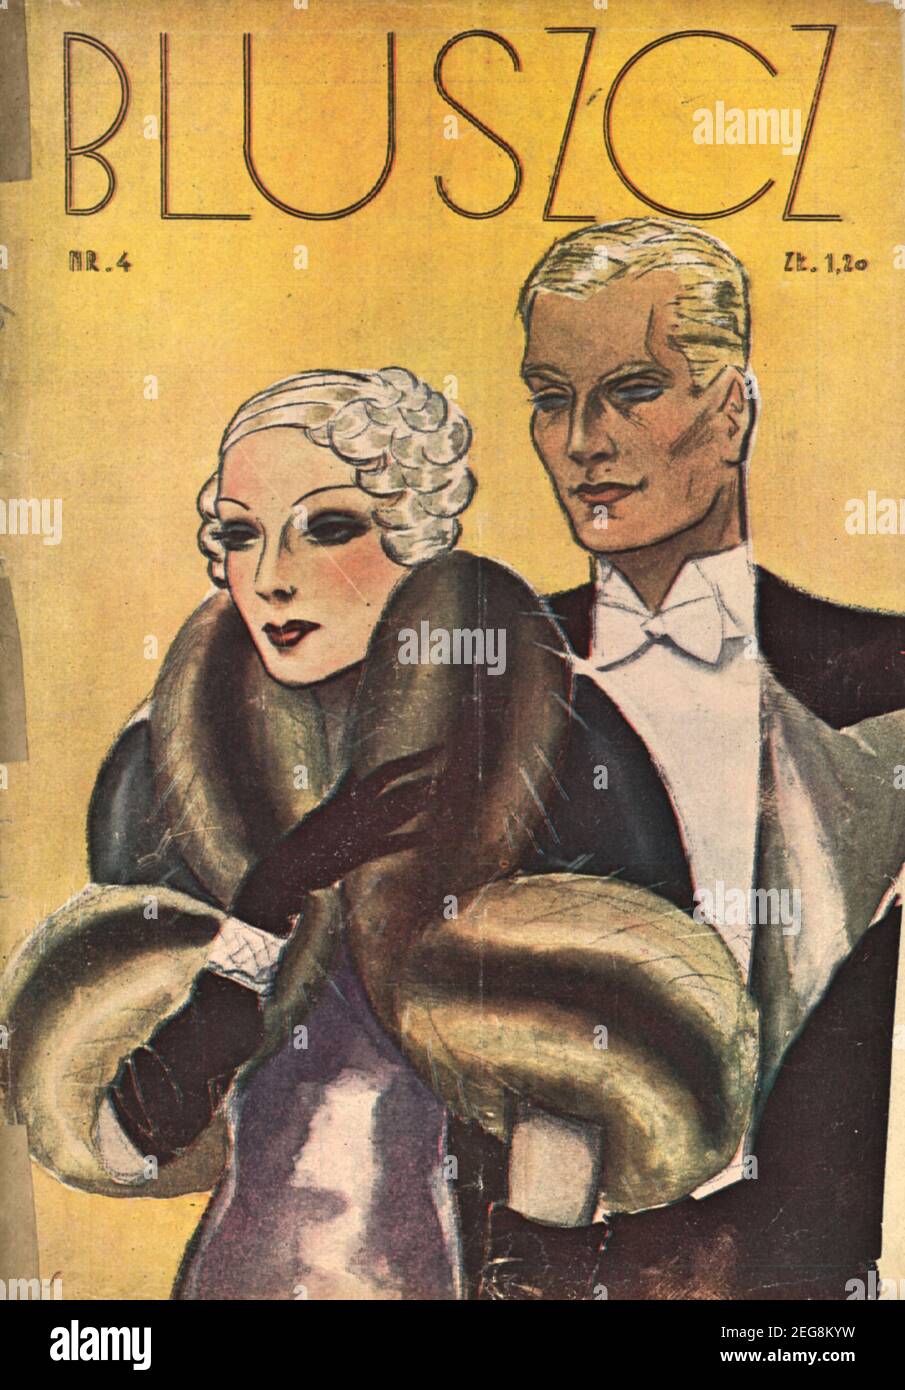 Okładka przedwojennego magazynu dla kobiet Bluszcz 1933, lata 30te, Cover der polnischen Vorkriegszeitschrift für Frauen Bluszcz Art déco-Stil Stockfoto